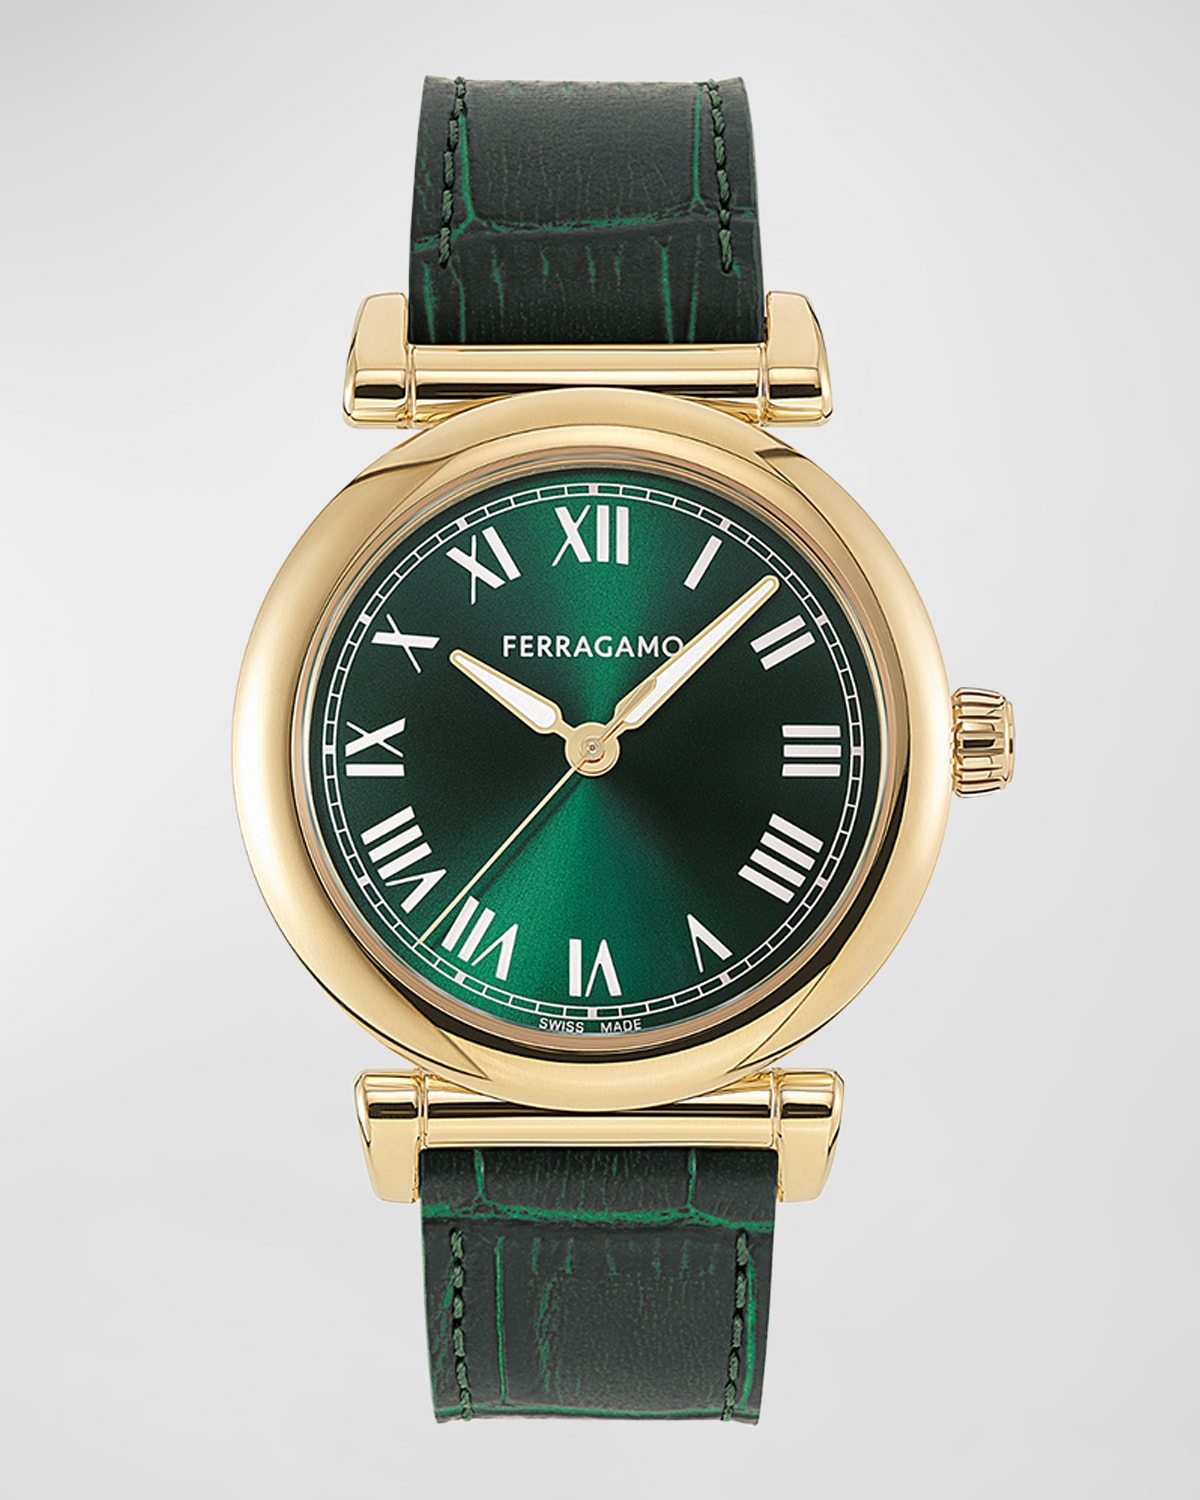 36mm Ferragamo Allure Watch with Calf Leather Strap, Green